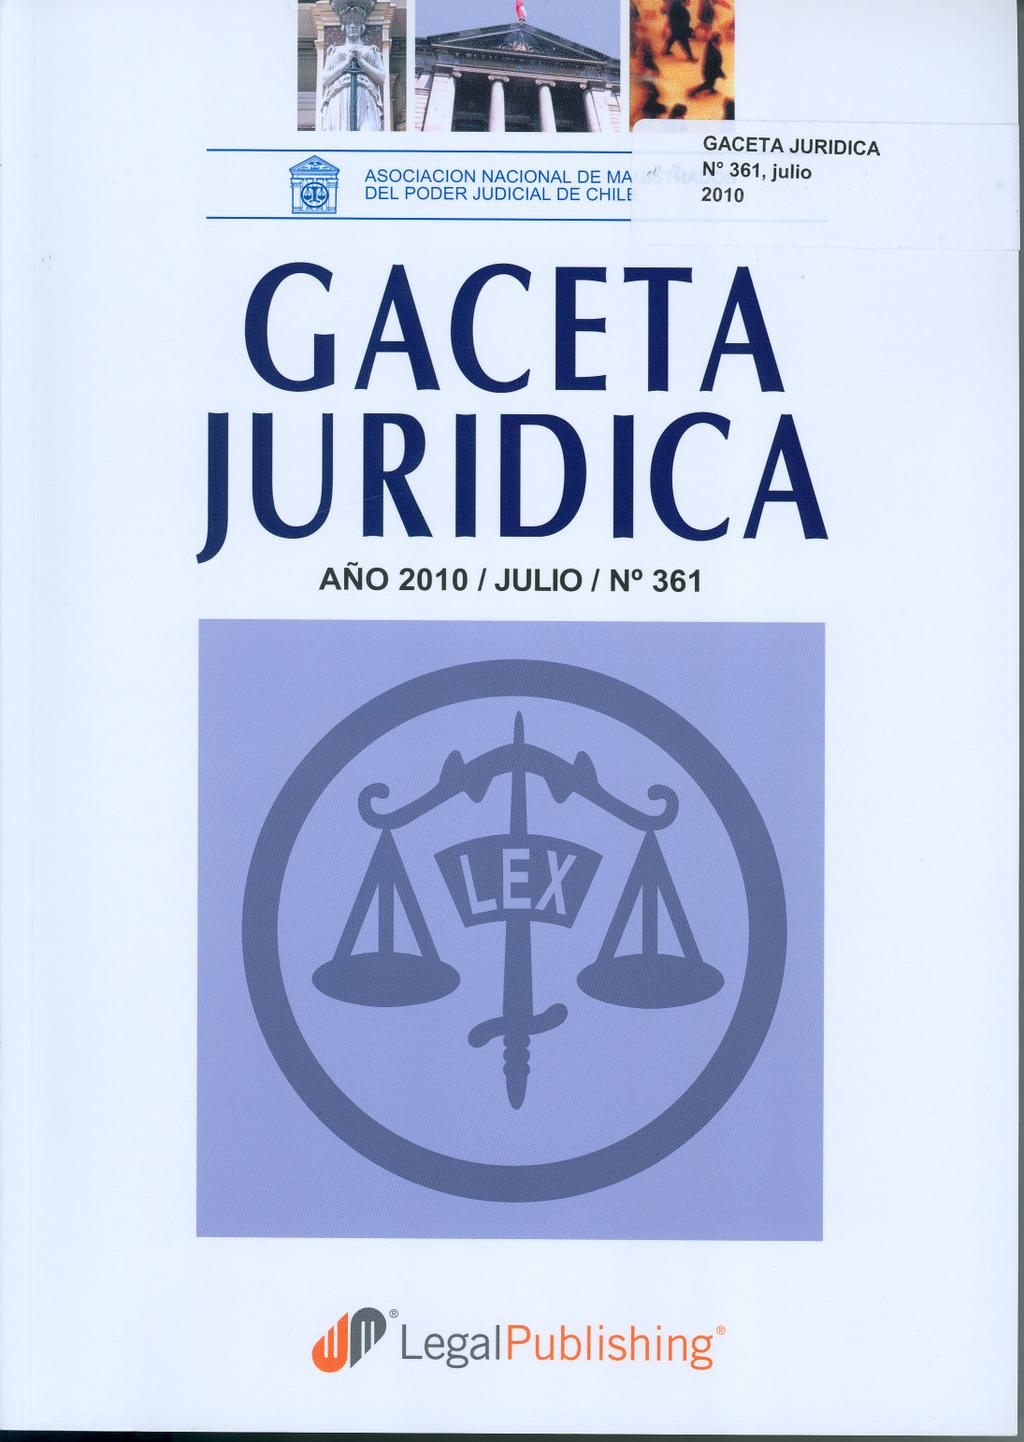 ~ ASOCIACION NACIONAL DE MA,1 IiIJ DELPODER JUDICIAL DE CHILE GACETA